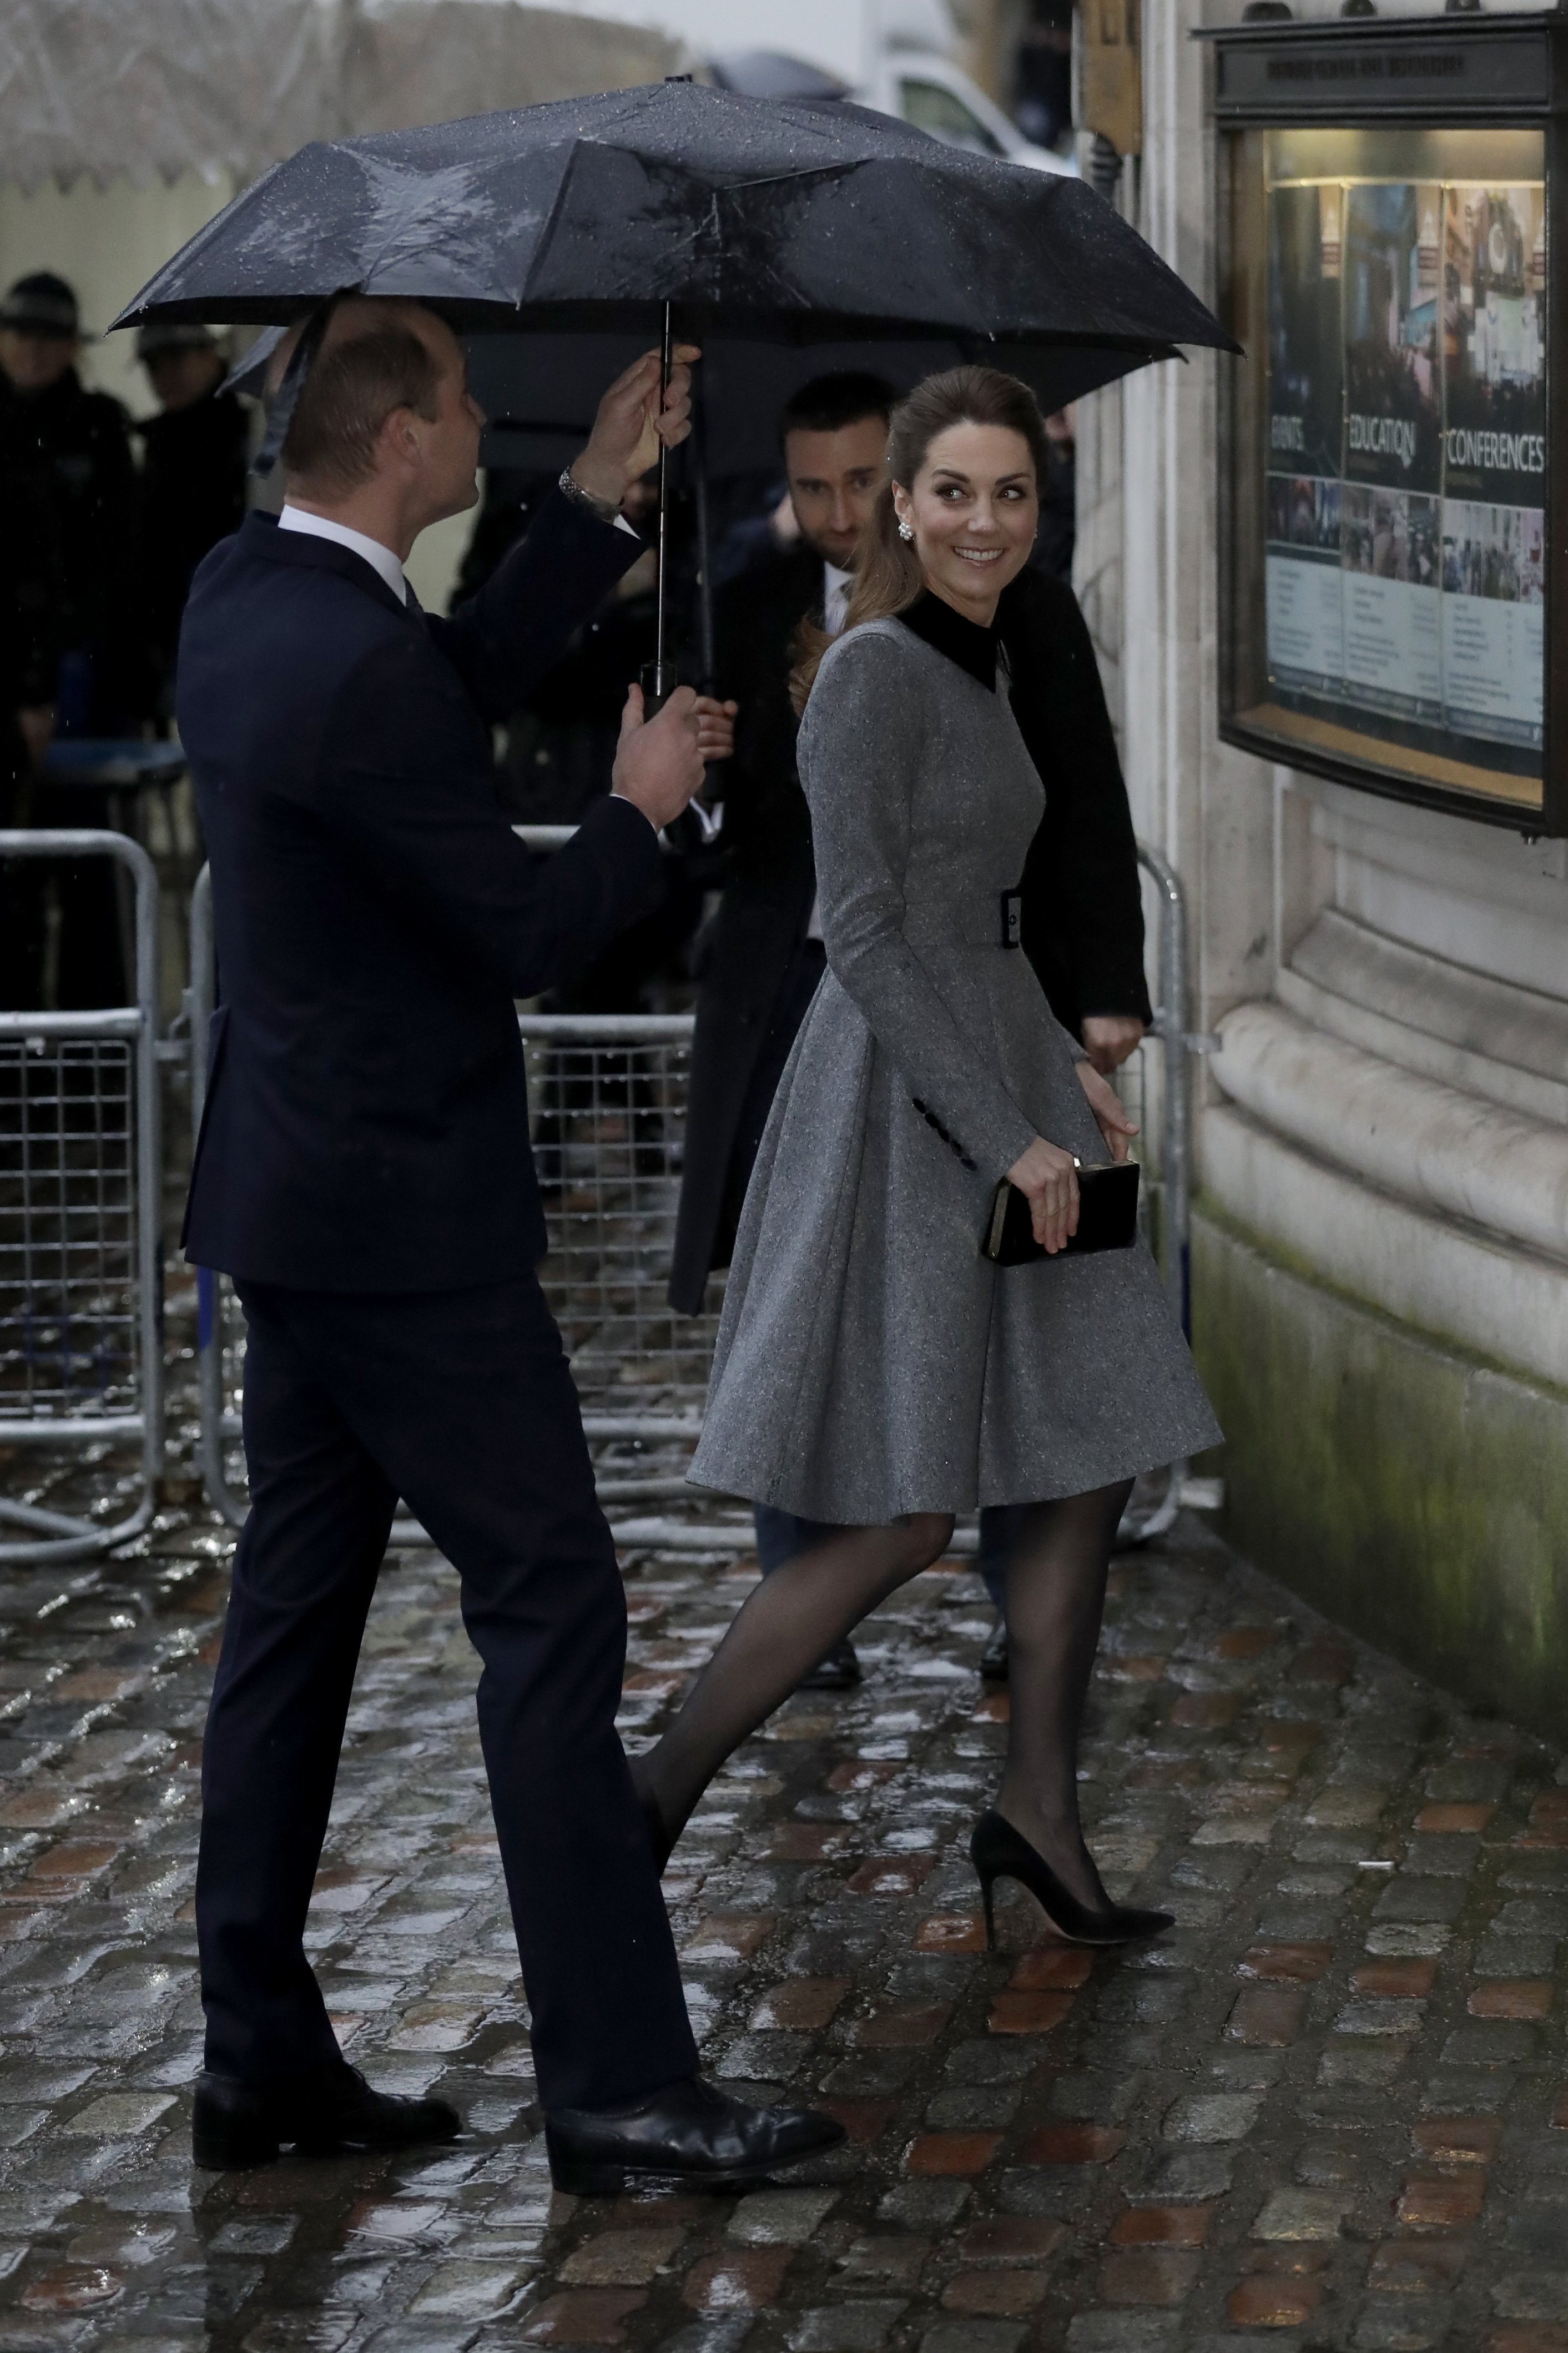 Mία μέρα που έβρεχε καταρρακτωδώς η Kate Middleton έκανε μία πολύ τολμηρή κίνηση και φόρεσε…